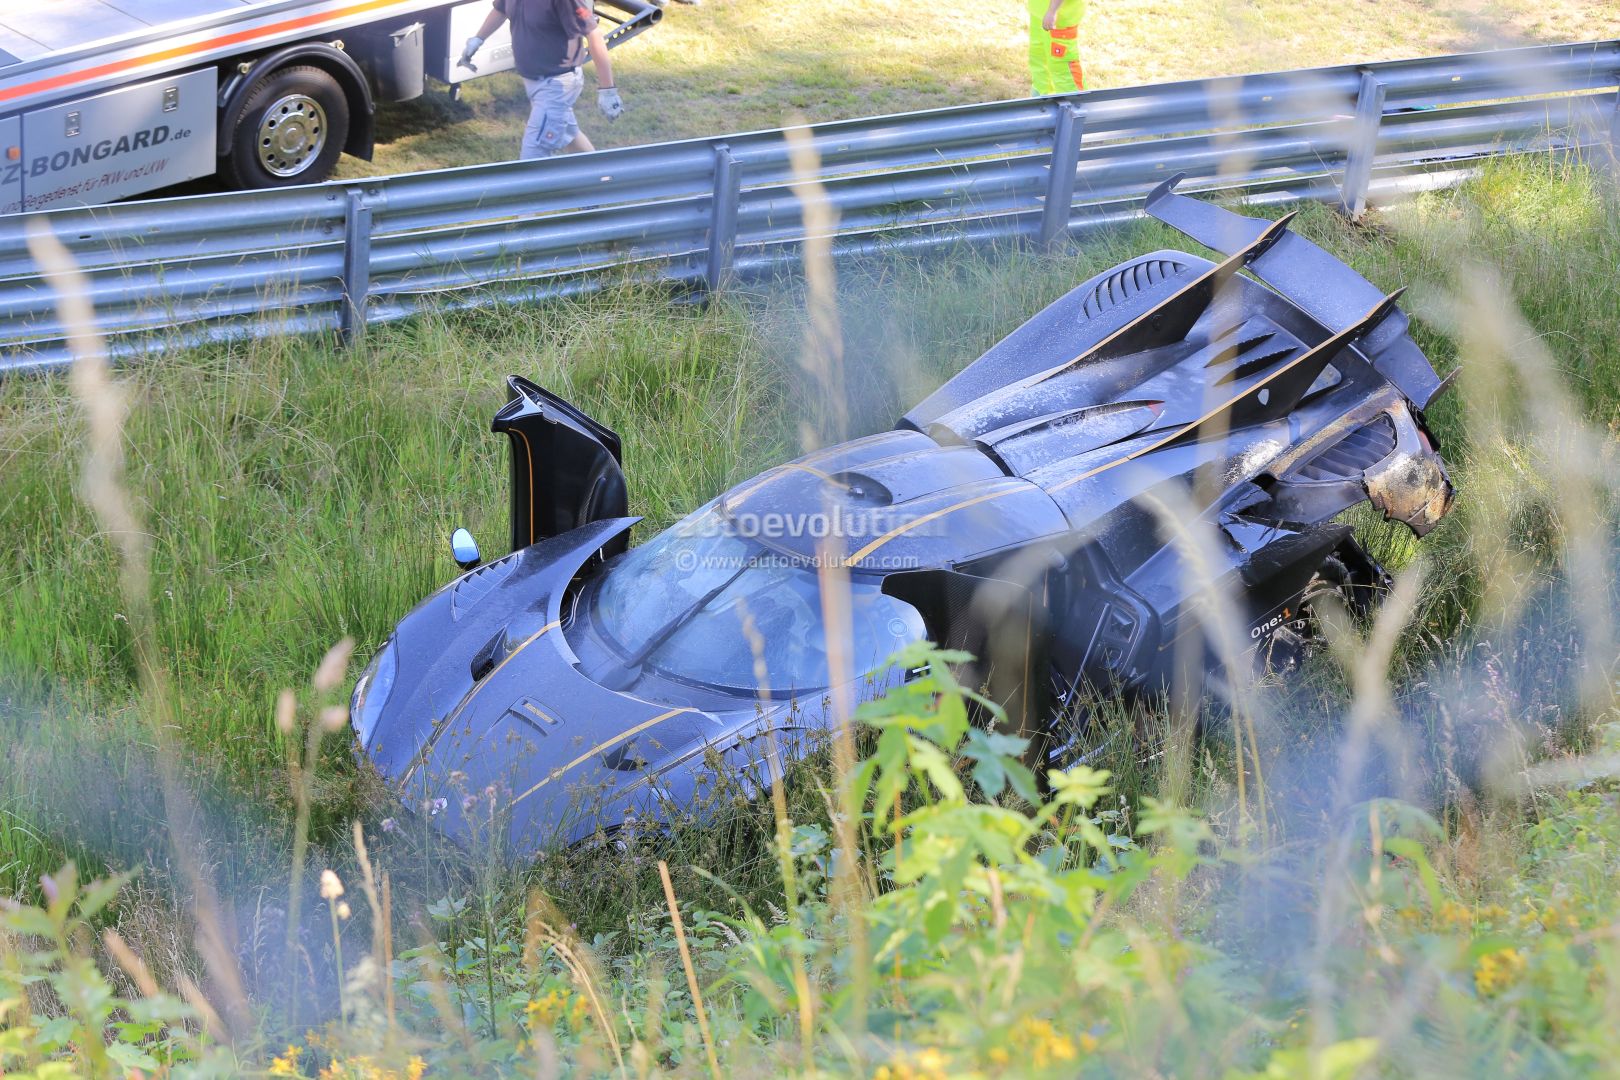 koenigsegg-one1-destroyed-in-brutal-nurburgring-crash-hypercar-caught-fire_11